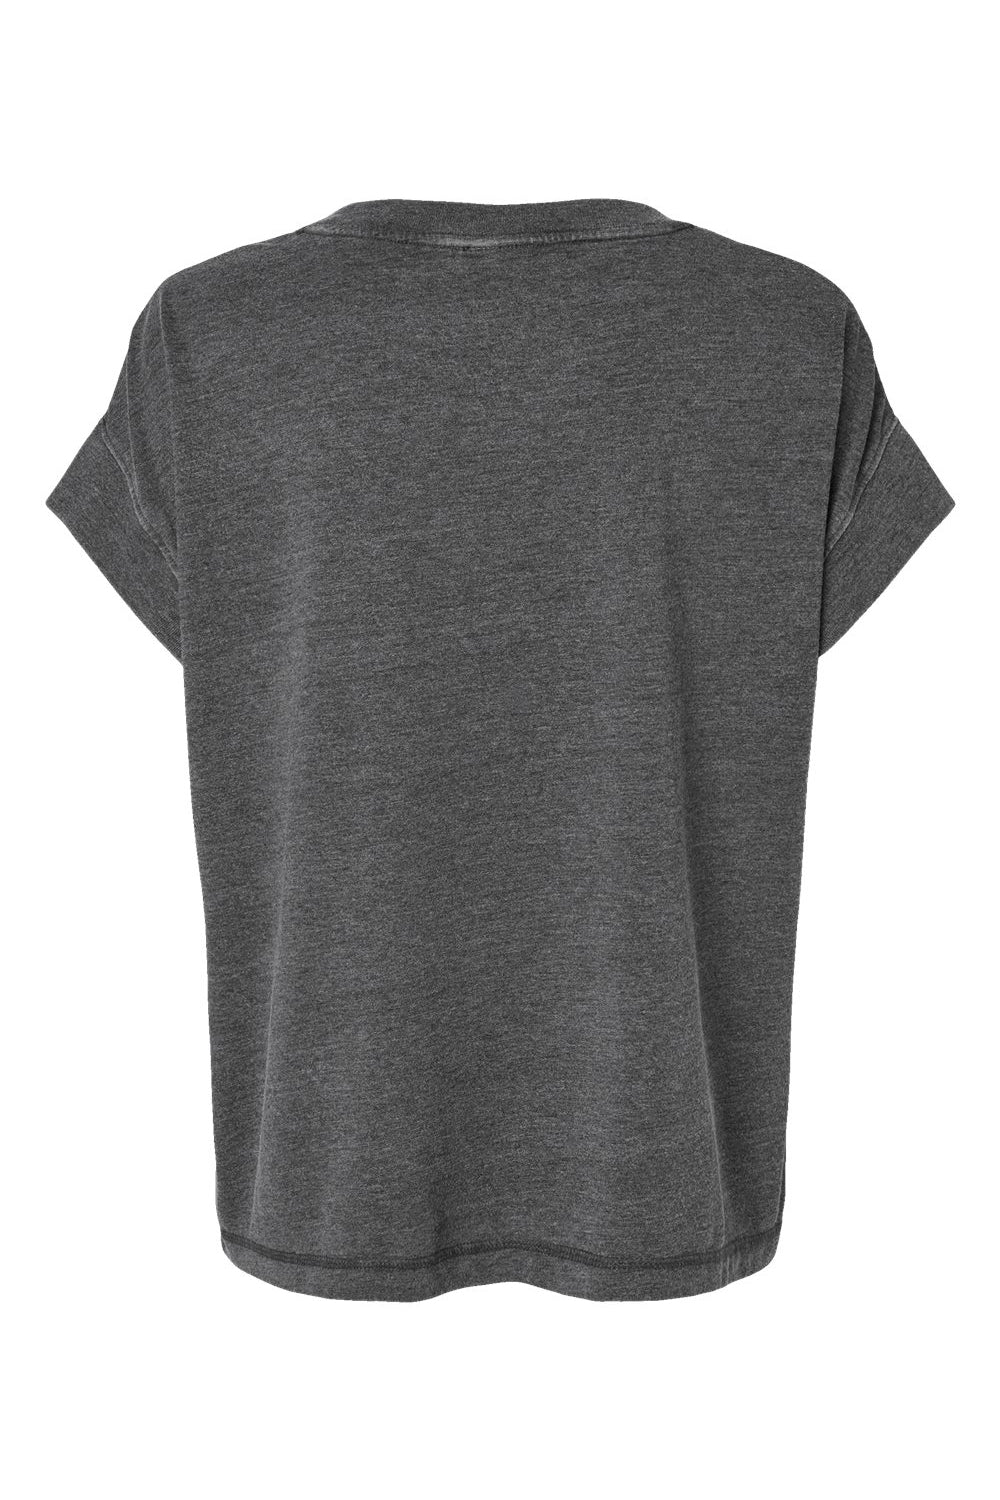 LAT 3502 Womens Relaxed Vintage Wash Short Sleeve Crewneck T-Shirt Black Flat Back